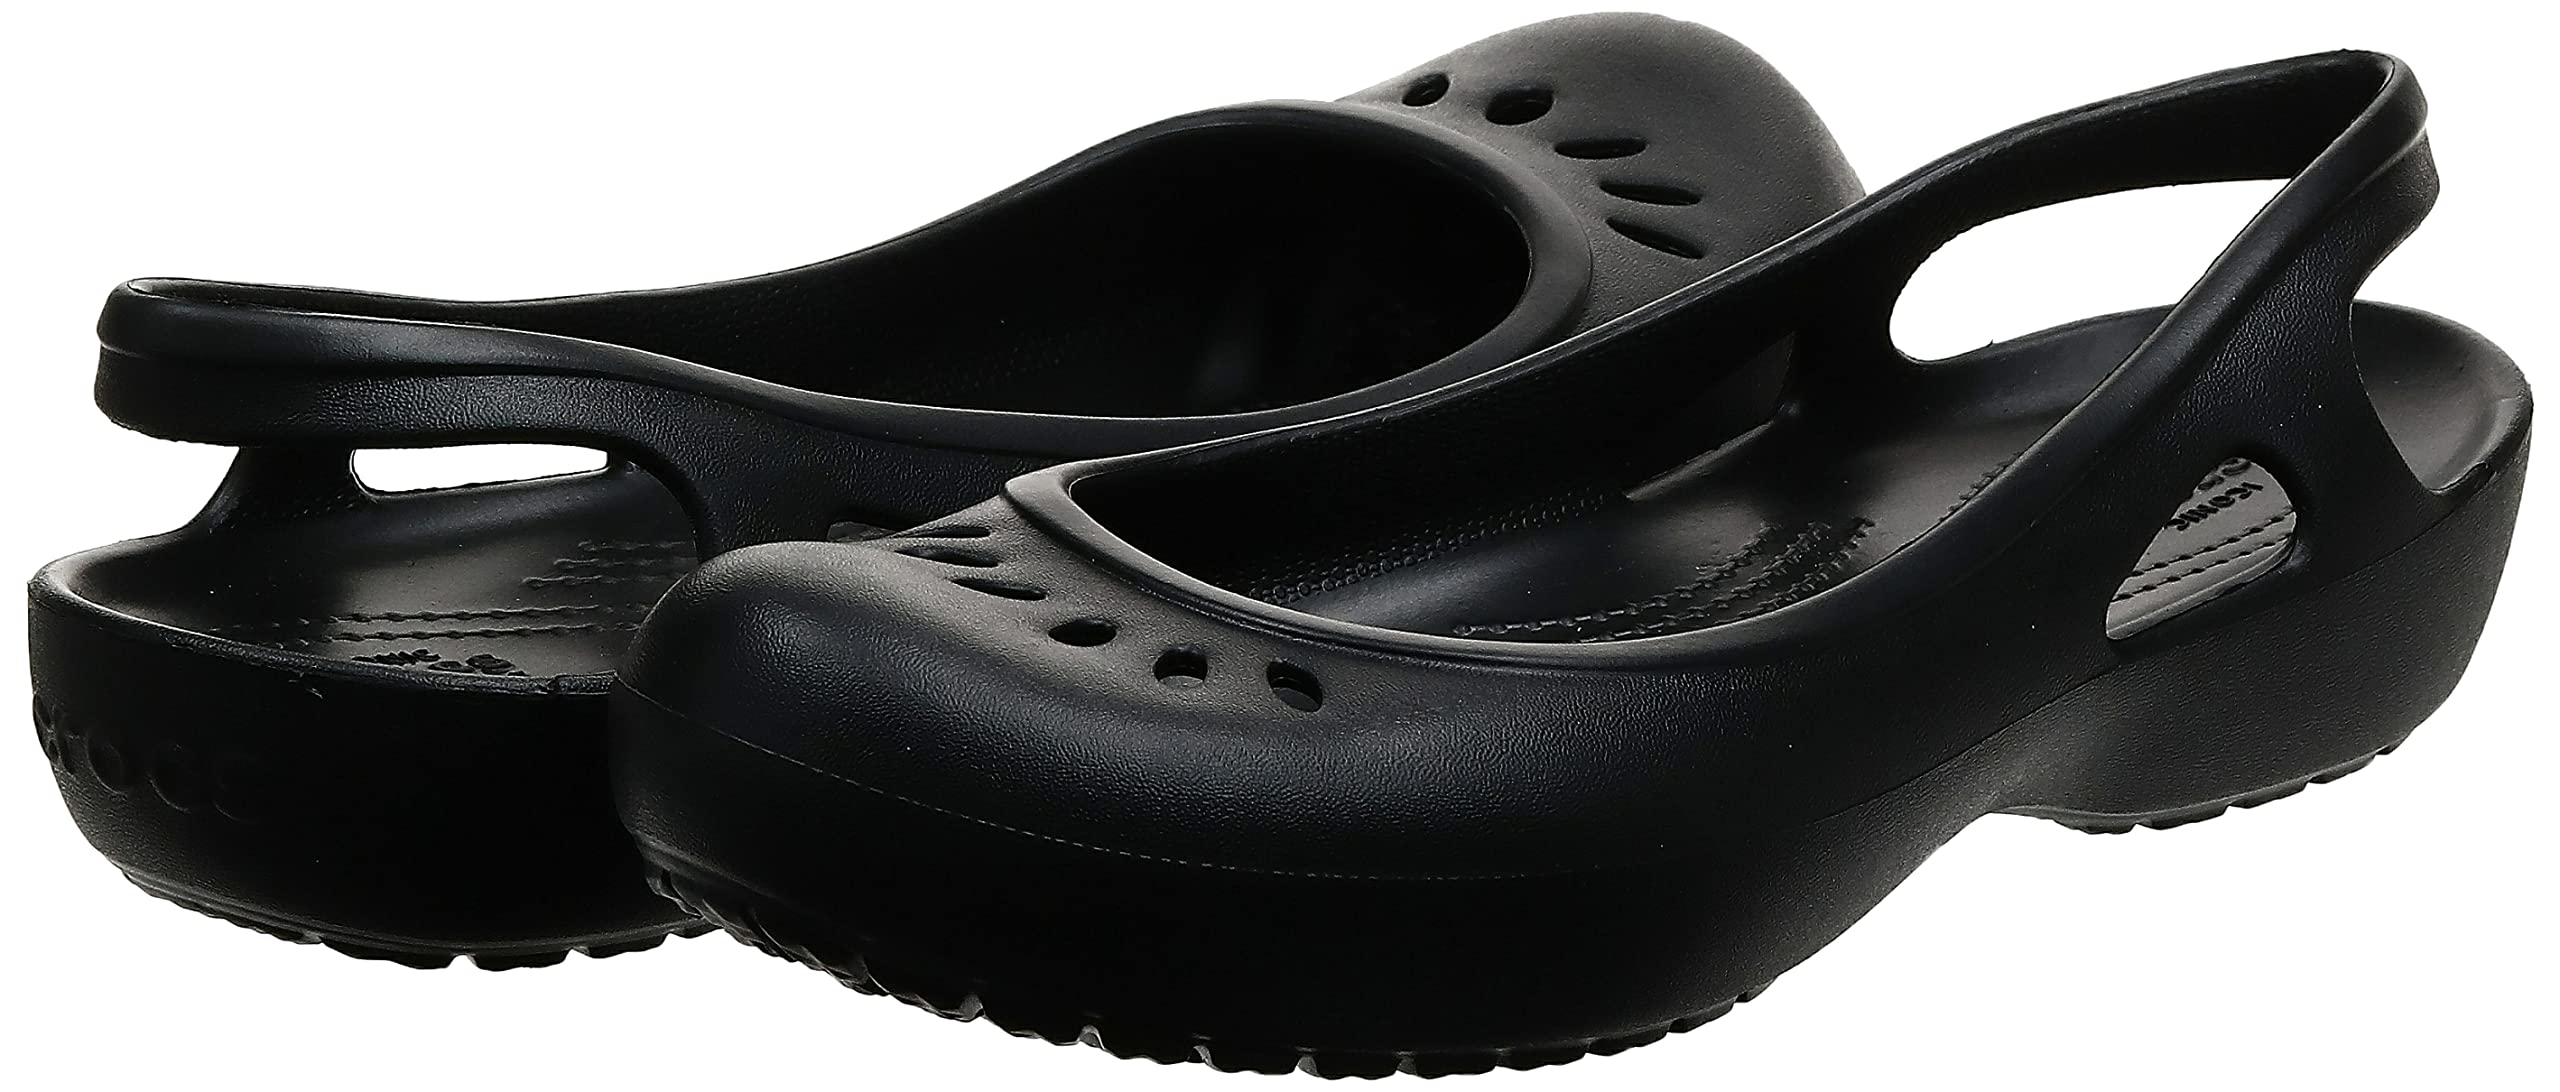 Mua Crocs 11215 Women's Kadee Flat Shoe trên Amazon Nhật chính hãng 2023 |  Giaonhan247